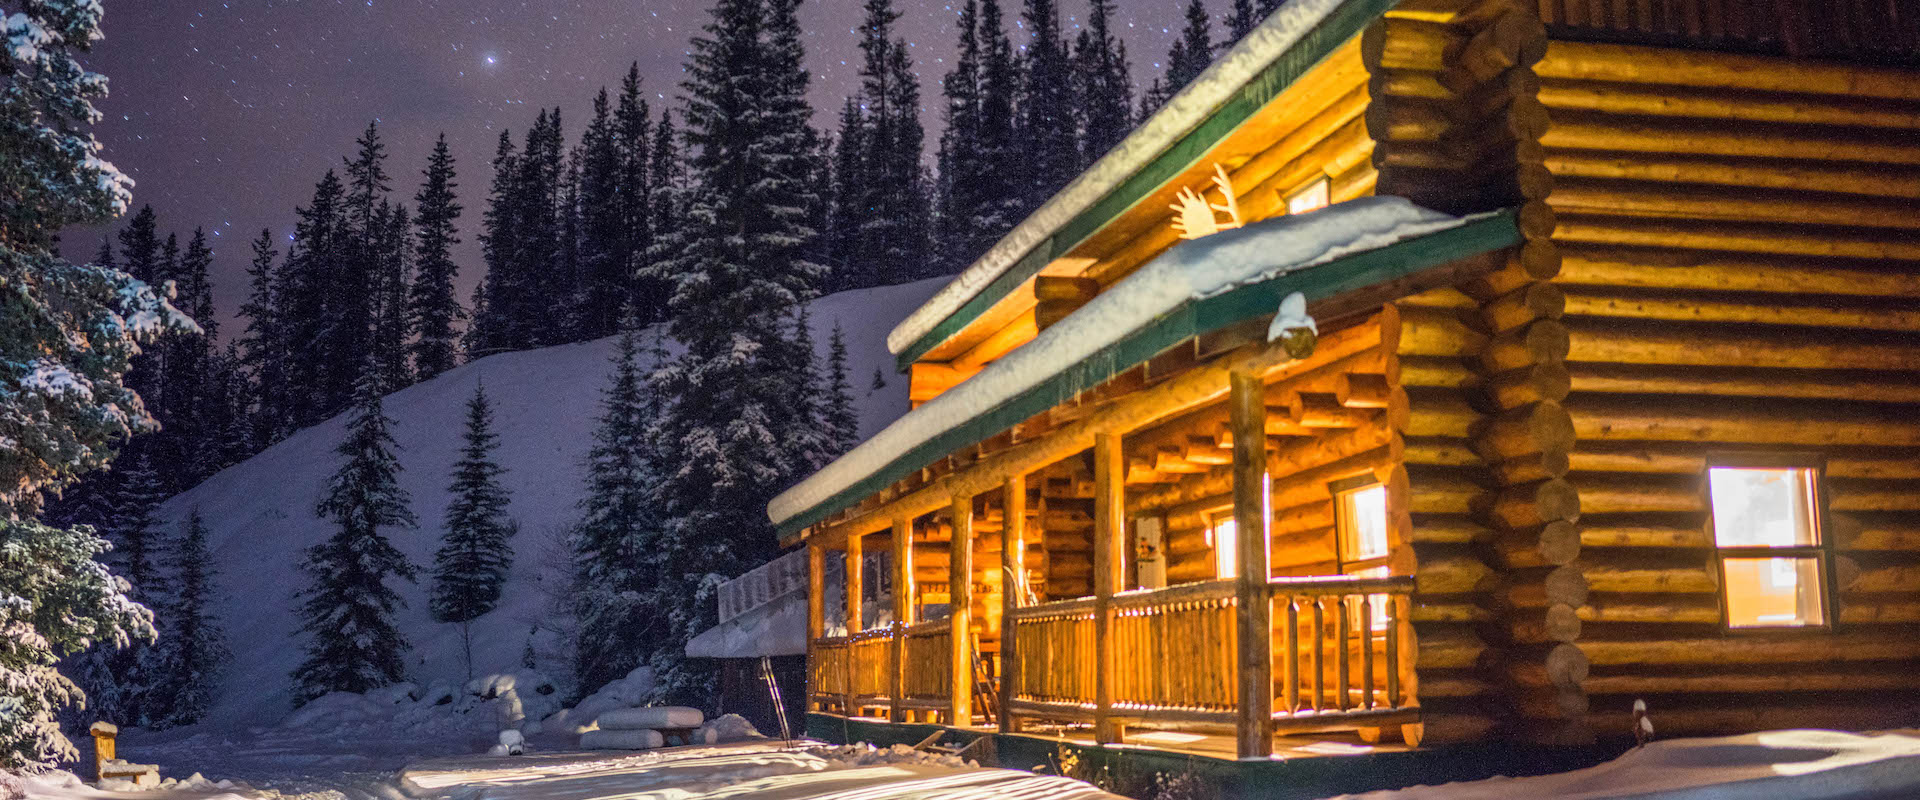 Sundance Backcountry Lodge in Winter in Banff, Canadian Rockies